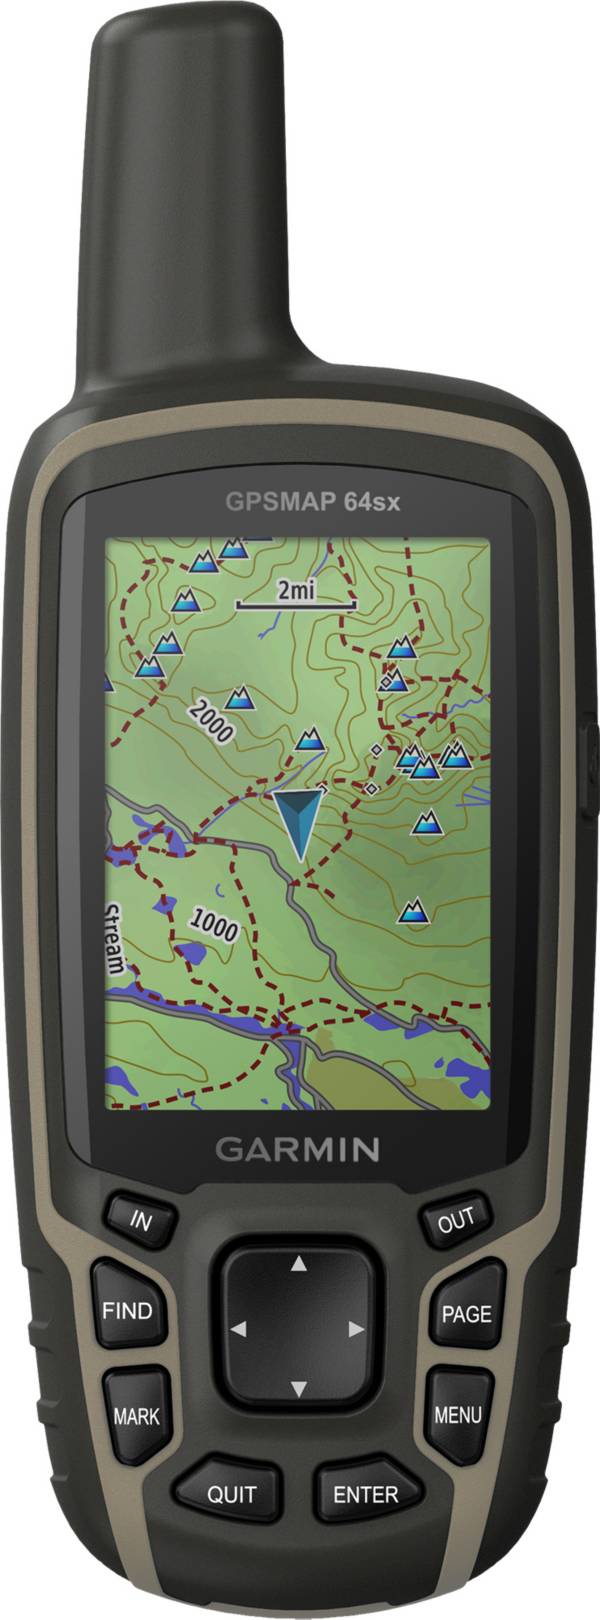 Garmin GPSMAP 64sx Handheld GPS with Navigation Sensors | Field & Stream